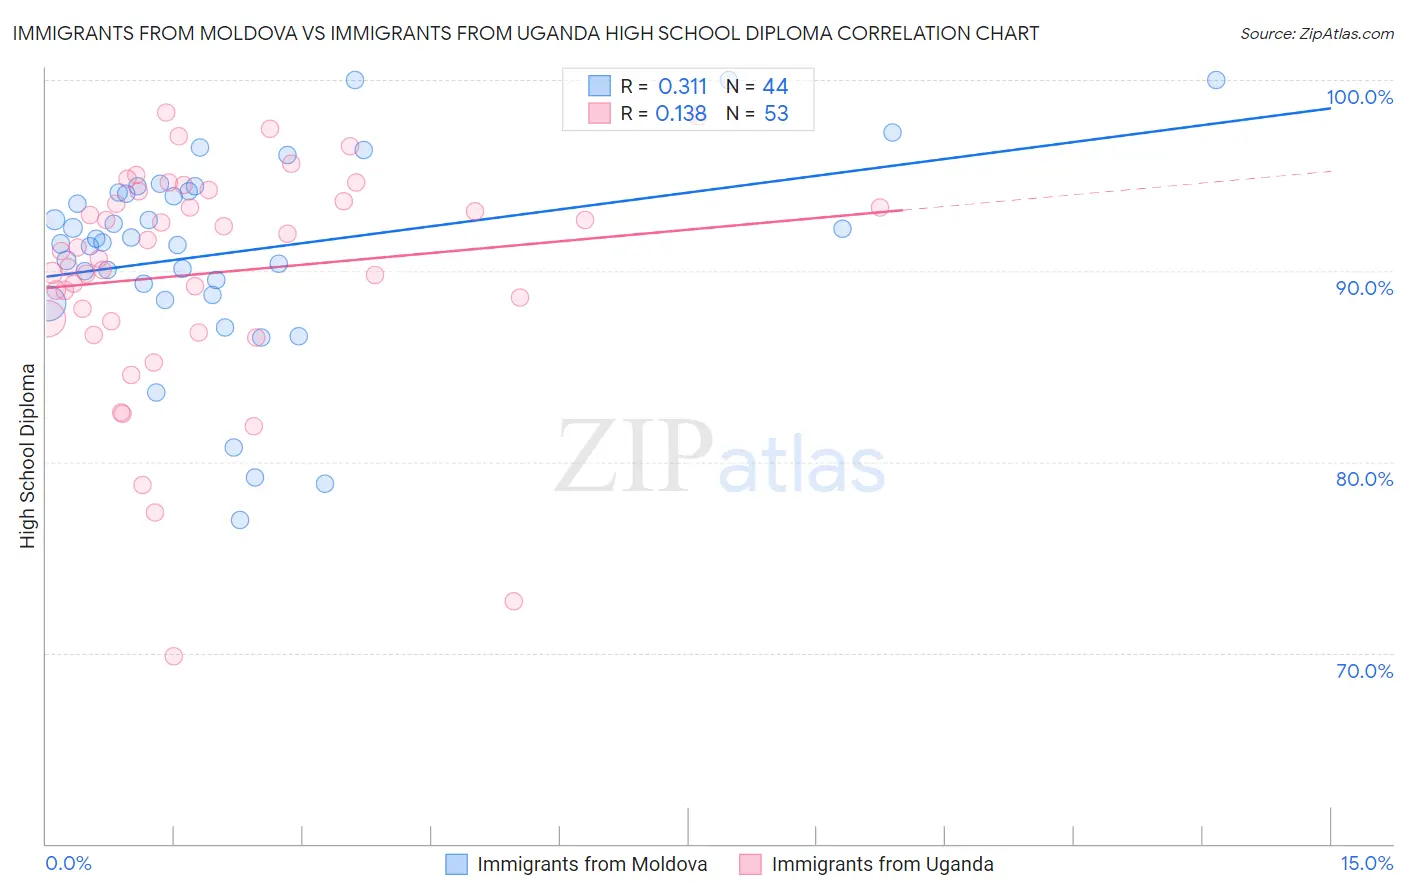 Immigrants from Moldova vs Immigrants from Uganda High School Diploma